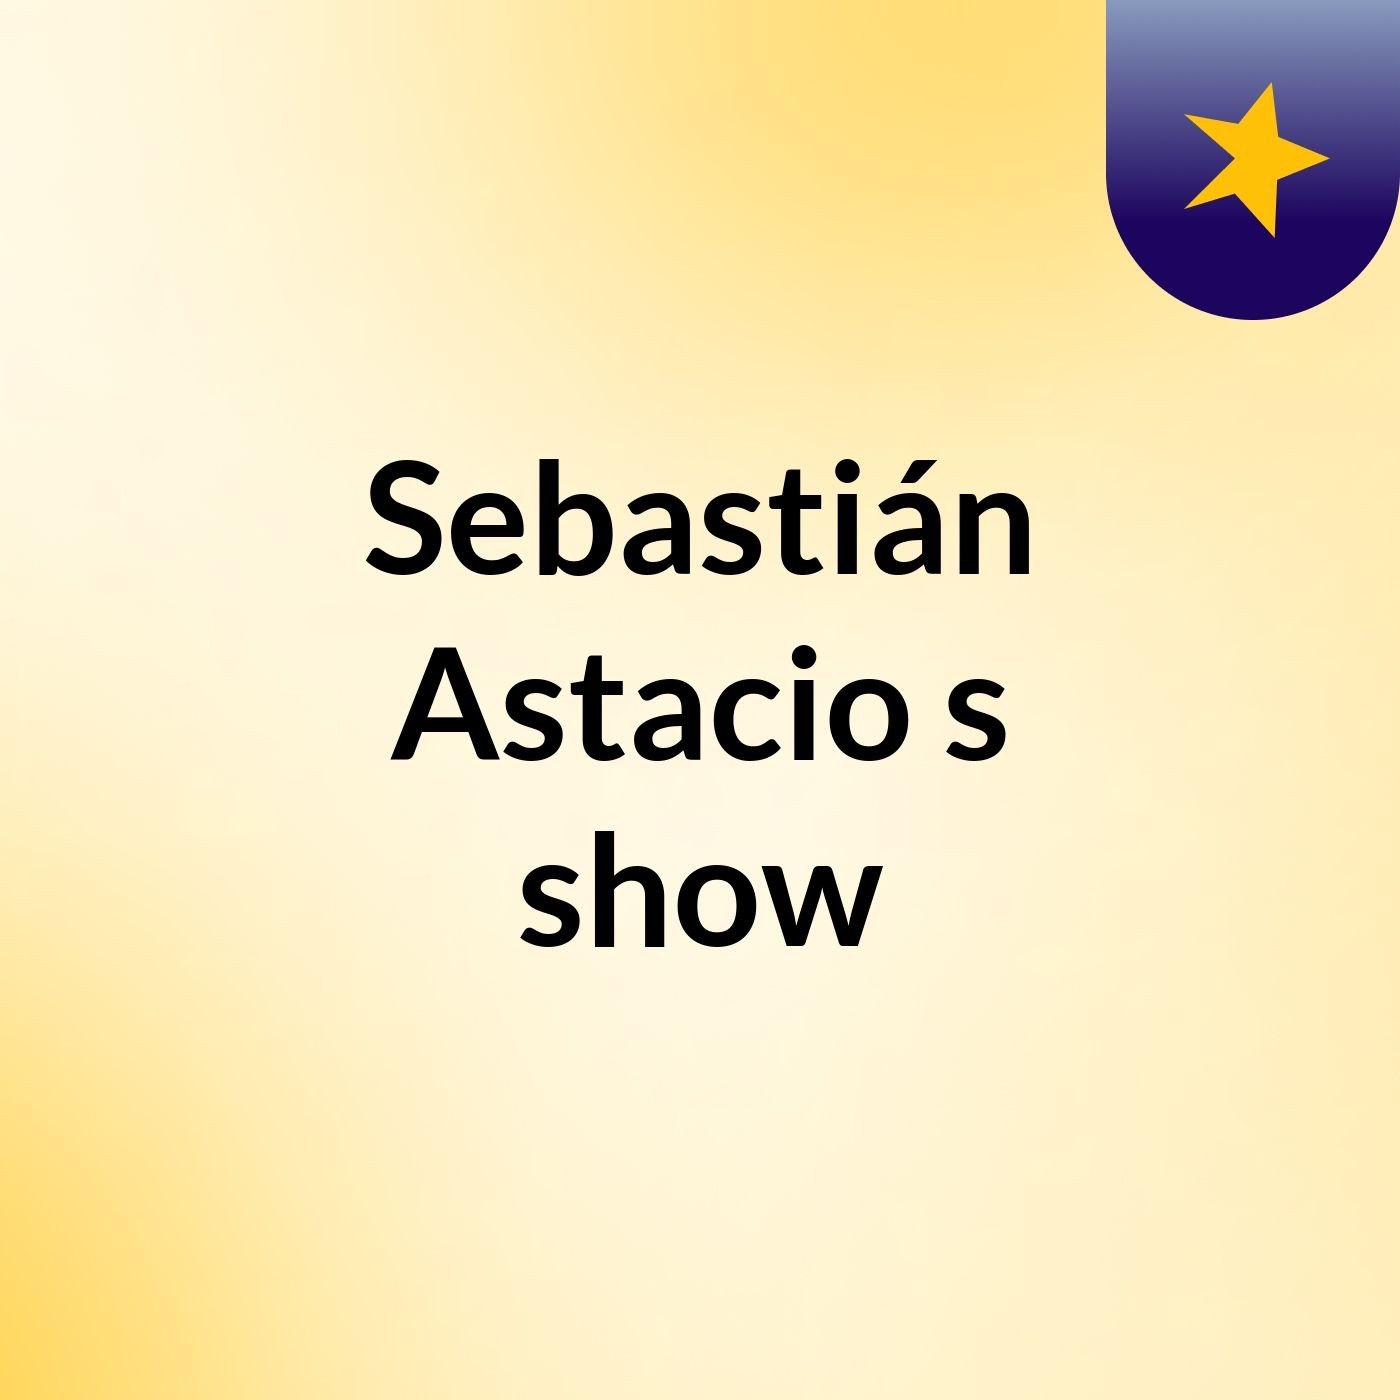 Sebastián Astacio's show